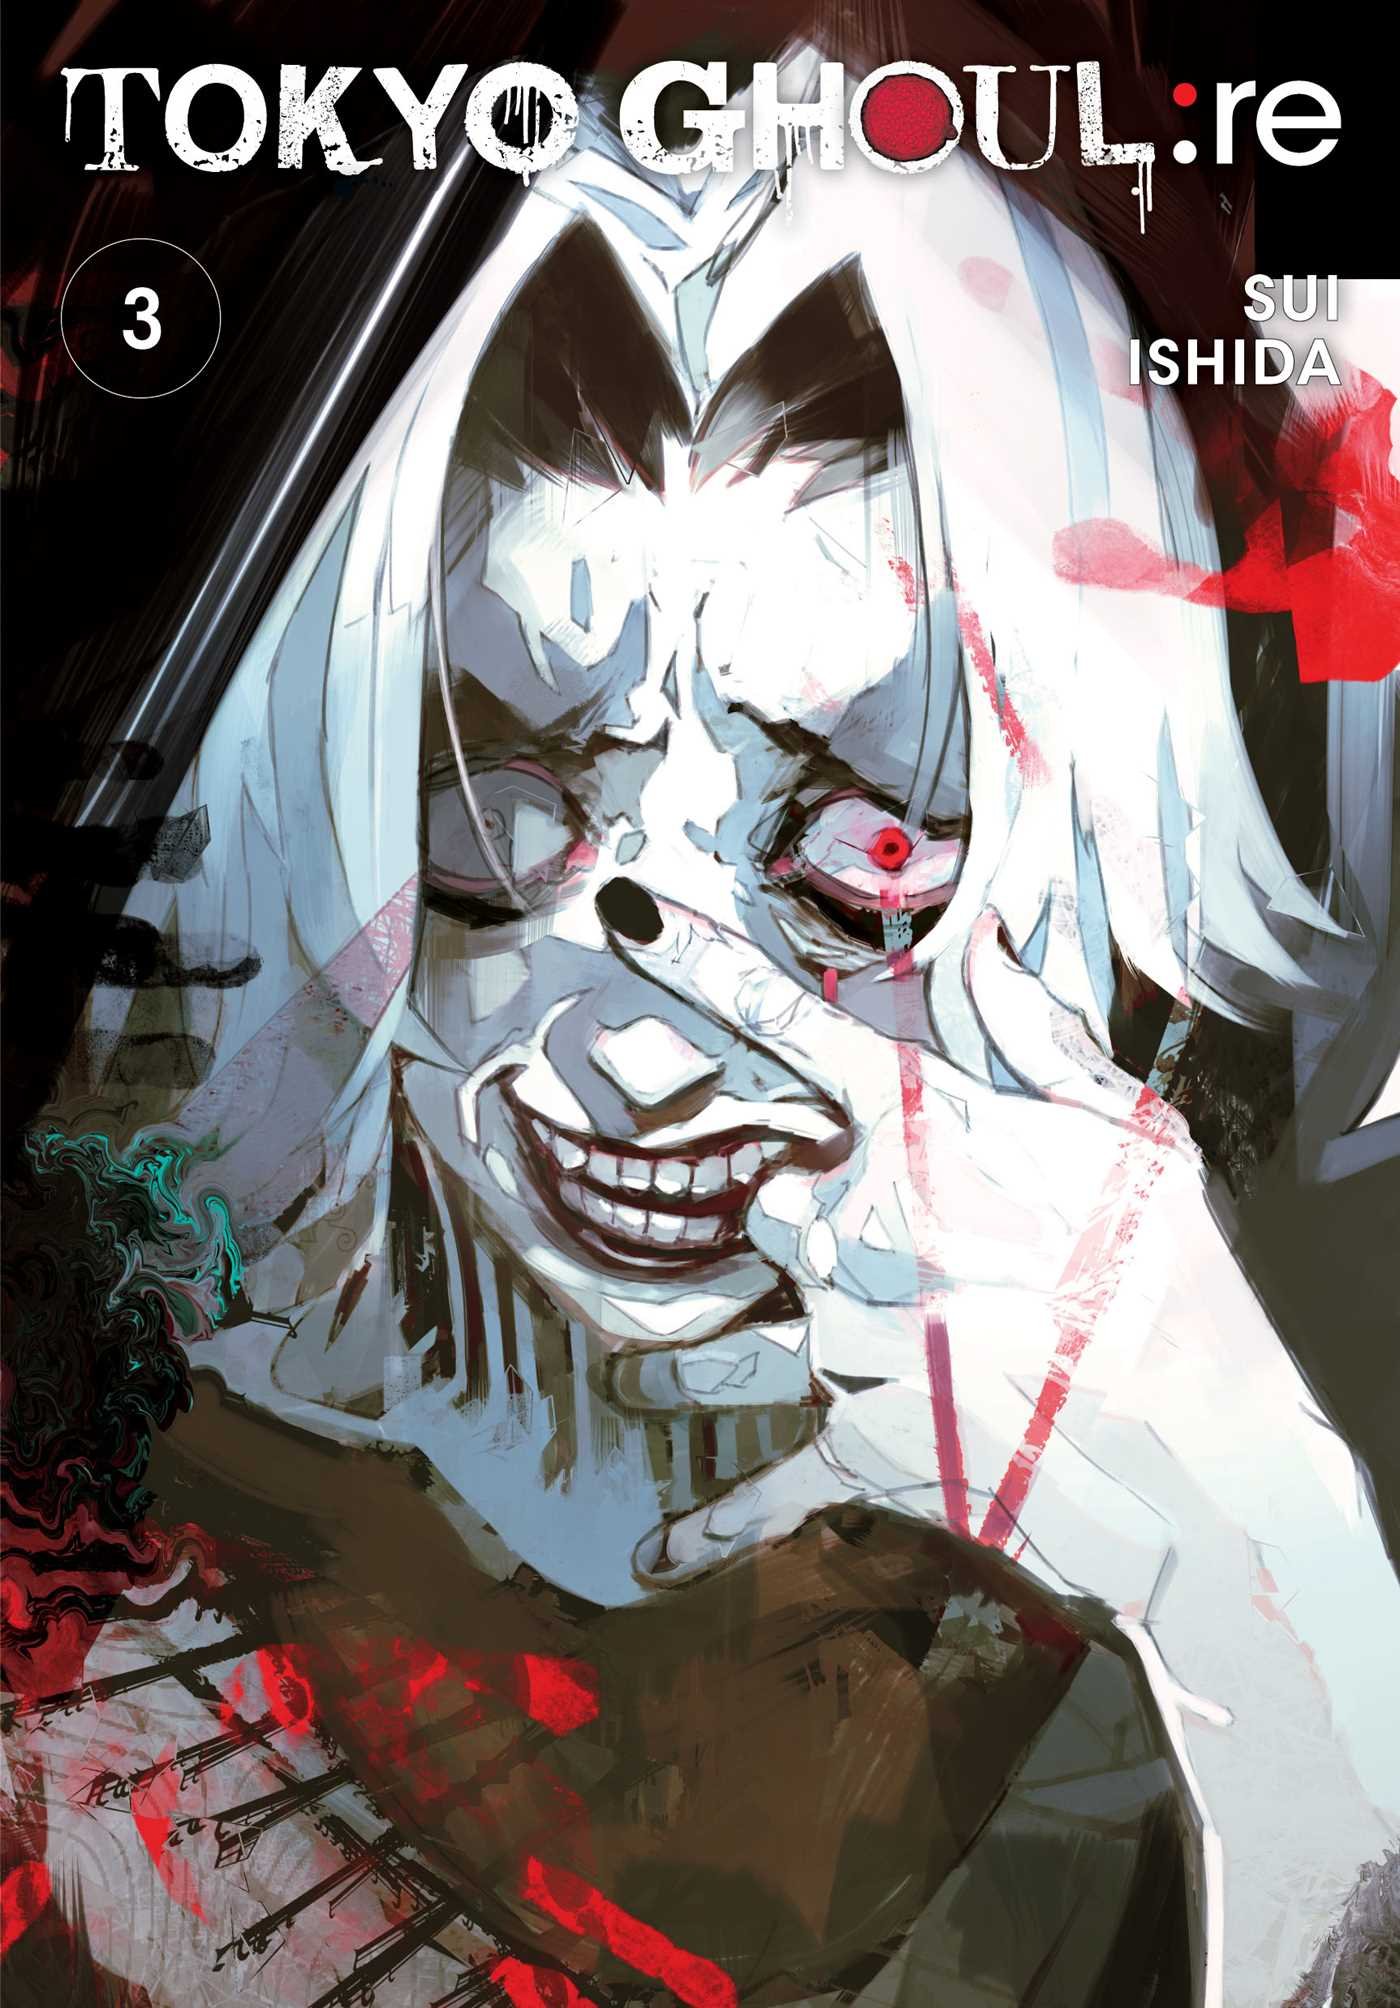 Tokyo Ghoul: re Vol. 3 | Sui Ishida